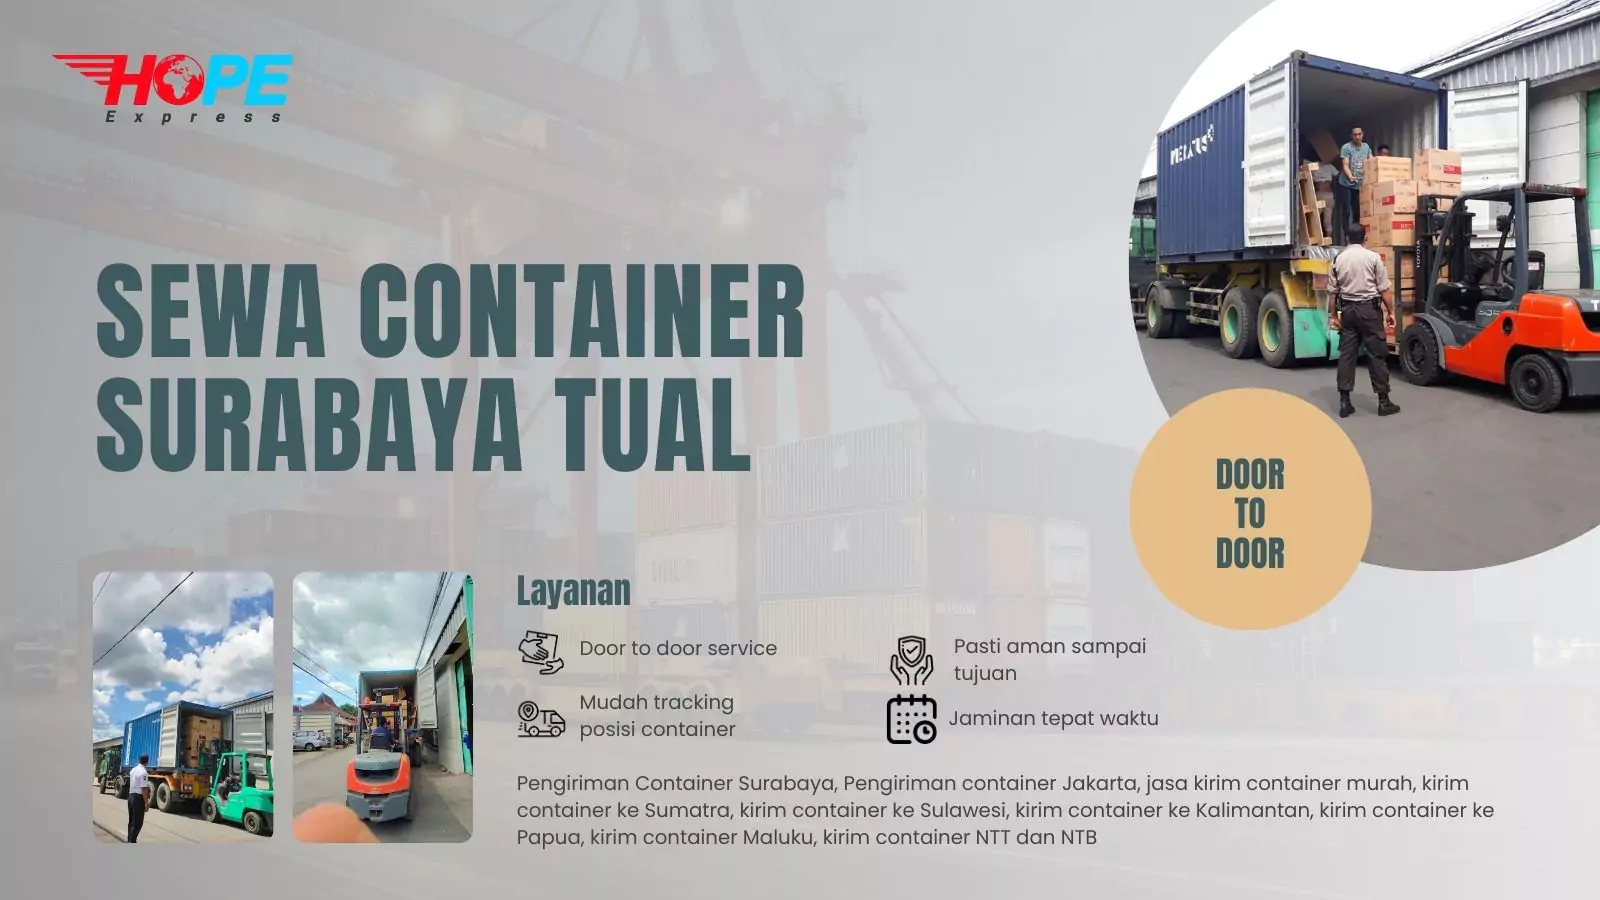 Sewa Container Surabaya Tual